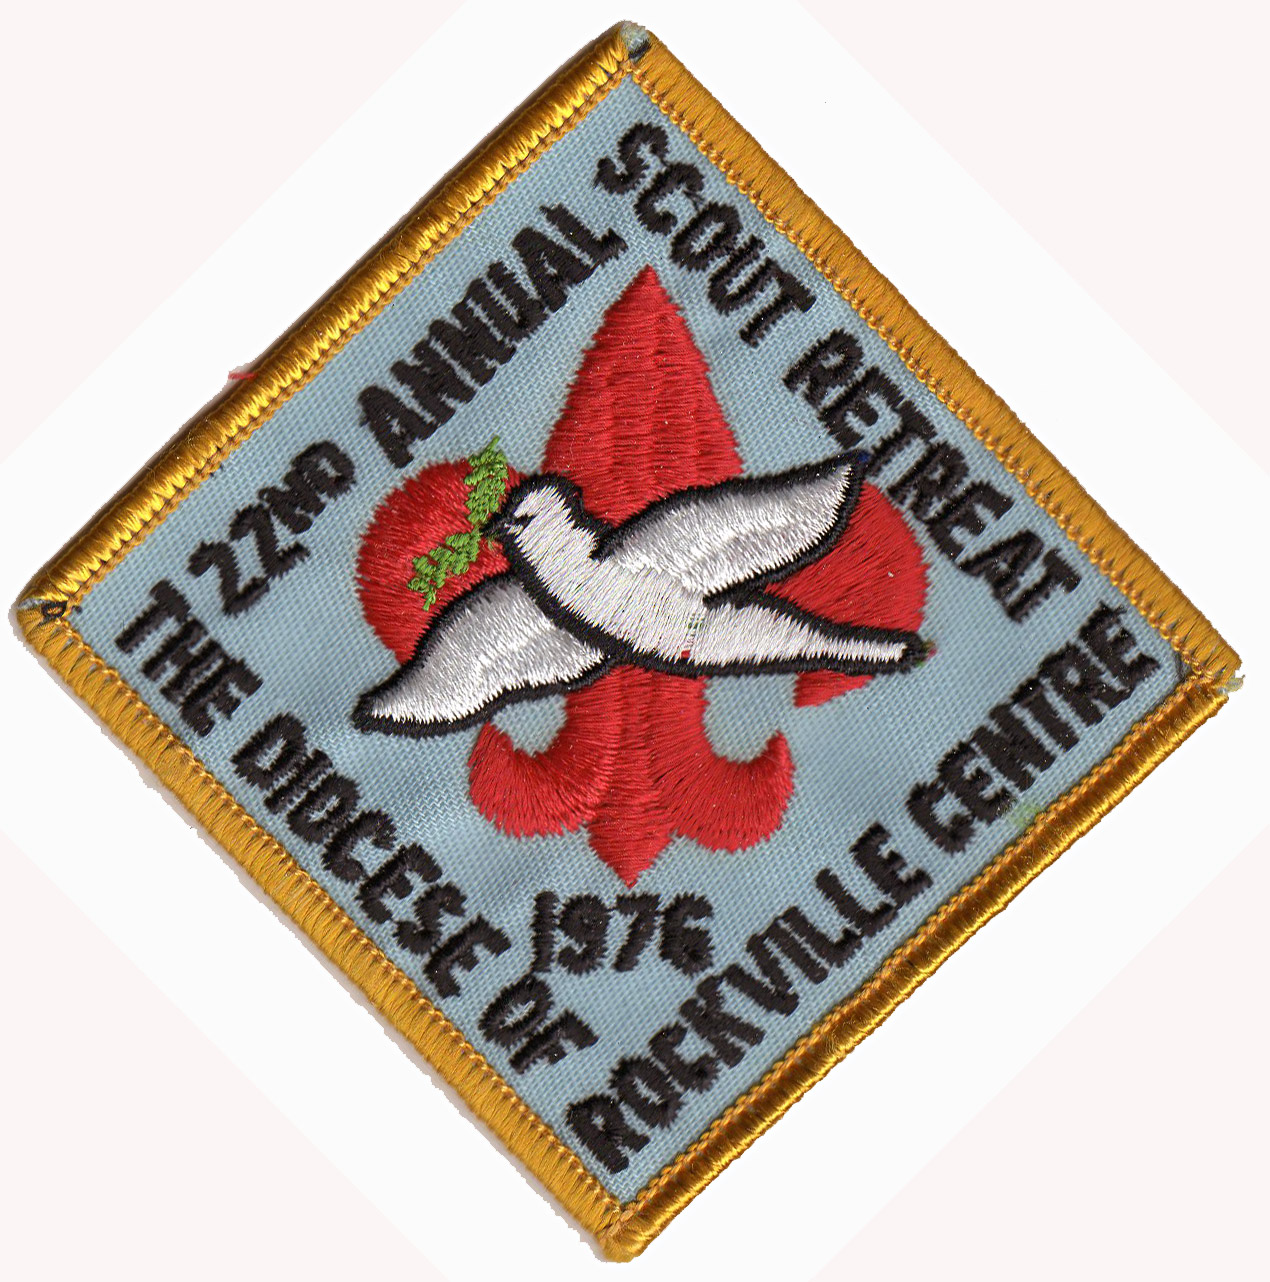 1976 Catholic Scout Retreat